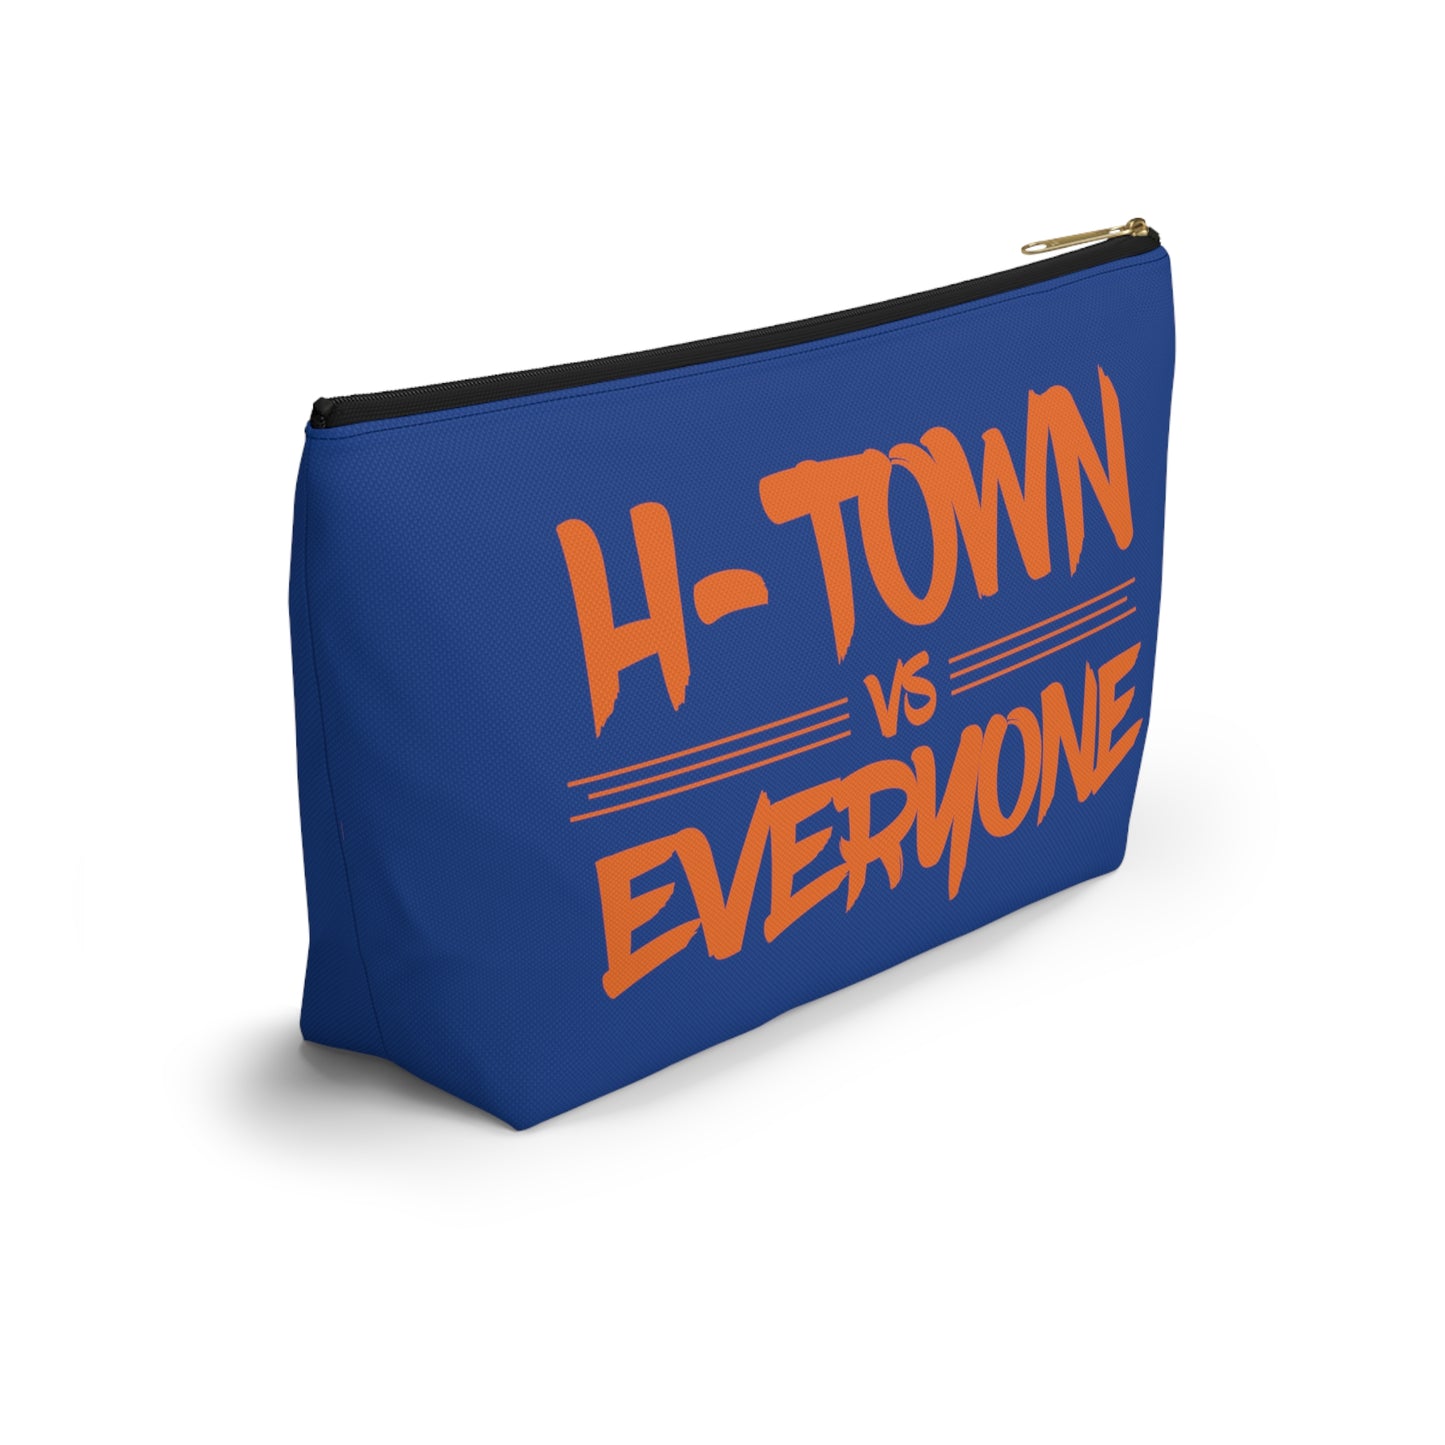 H-Town vs Everyone Zipper Pouch - Navy